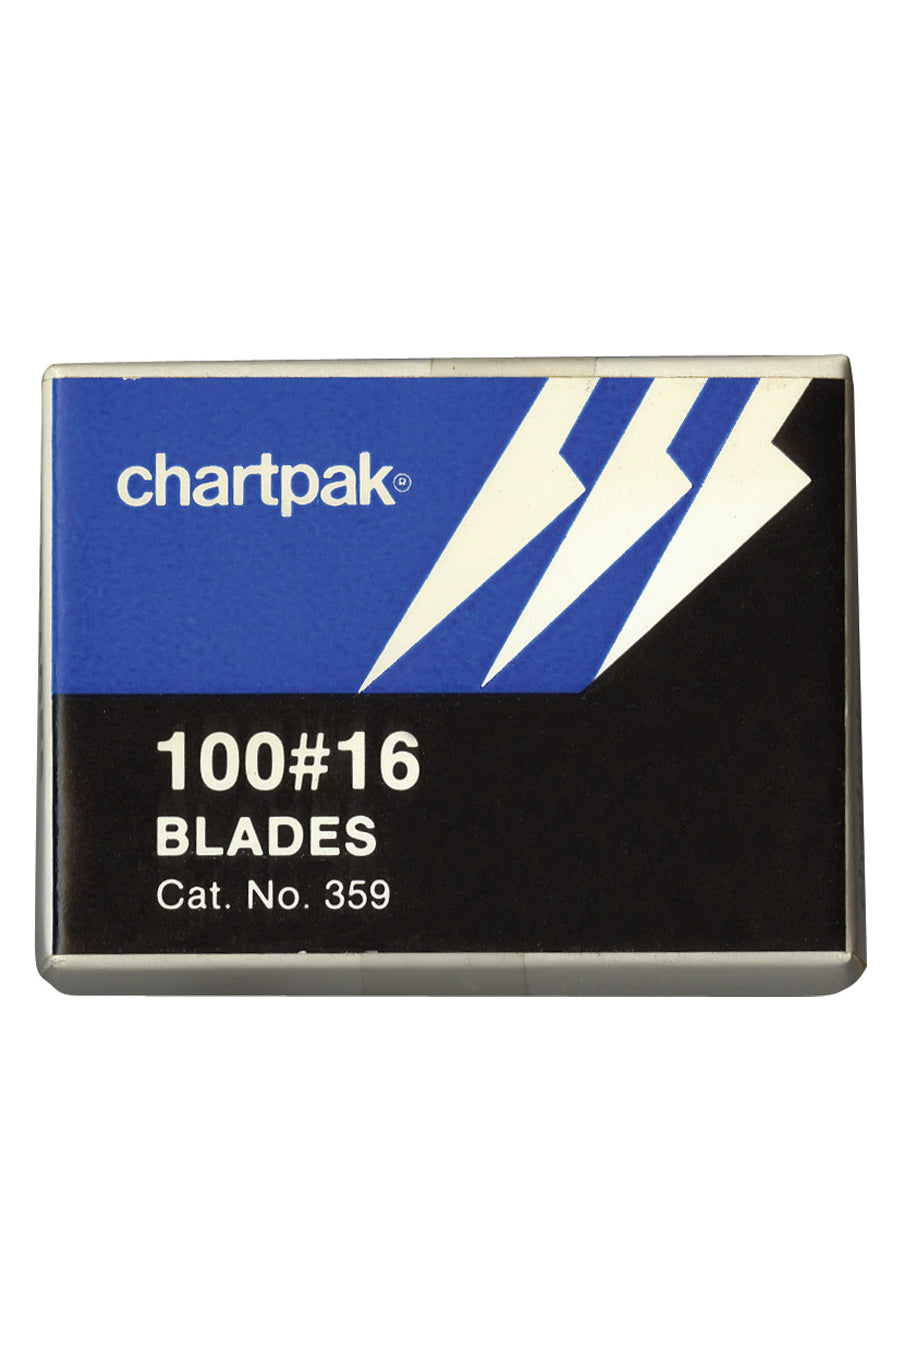 No. 16 Blade, 100 Blades per Pack